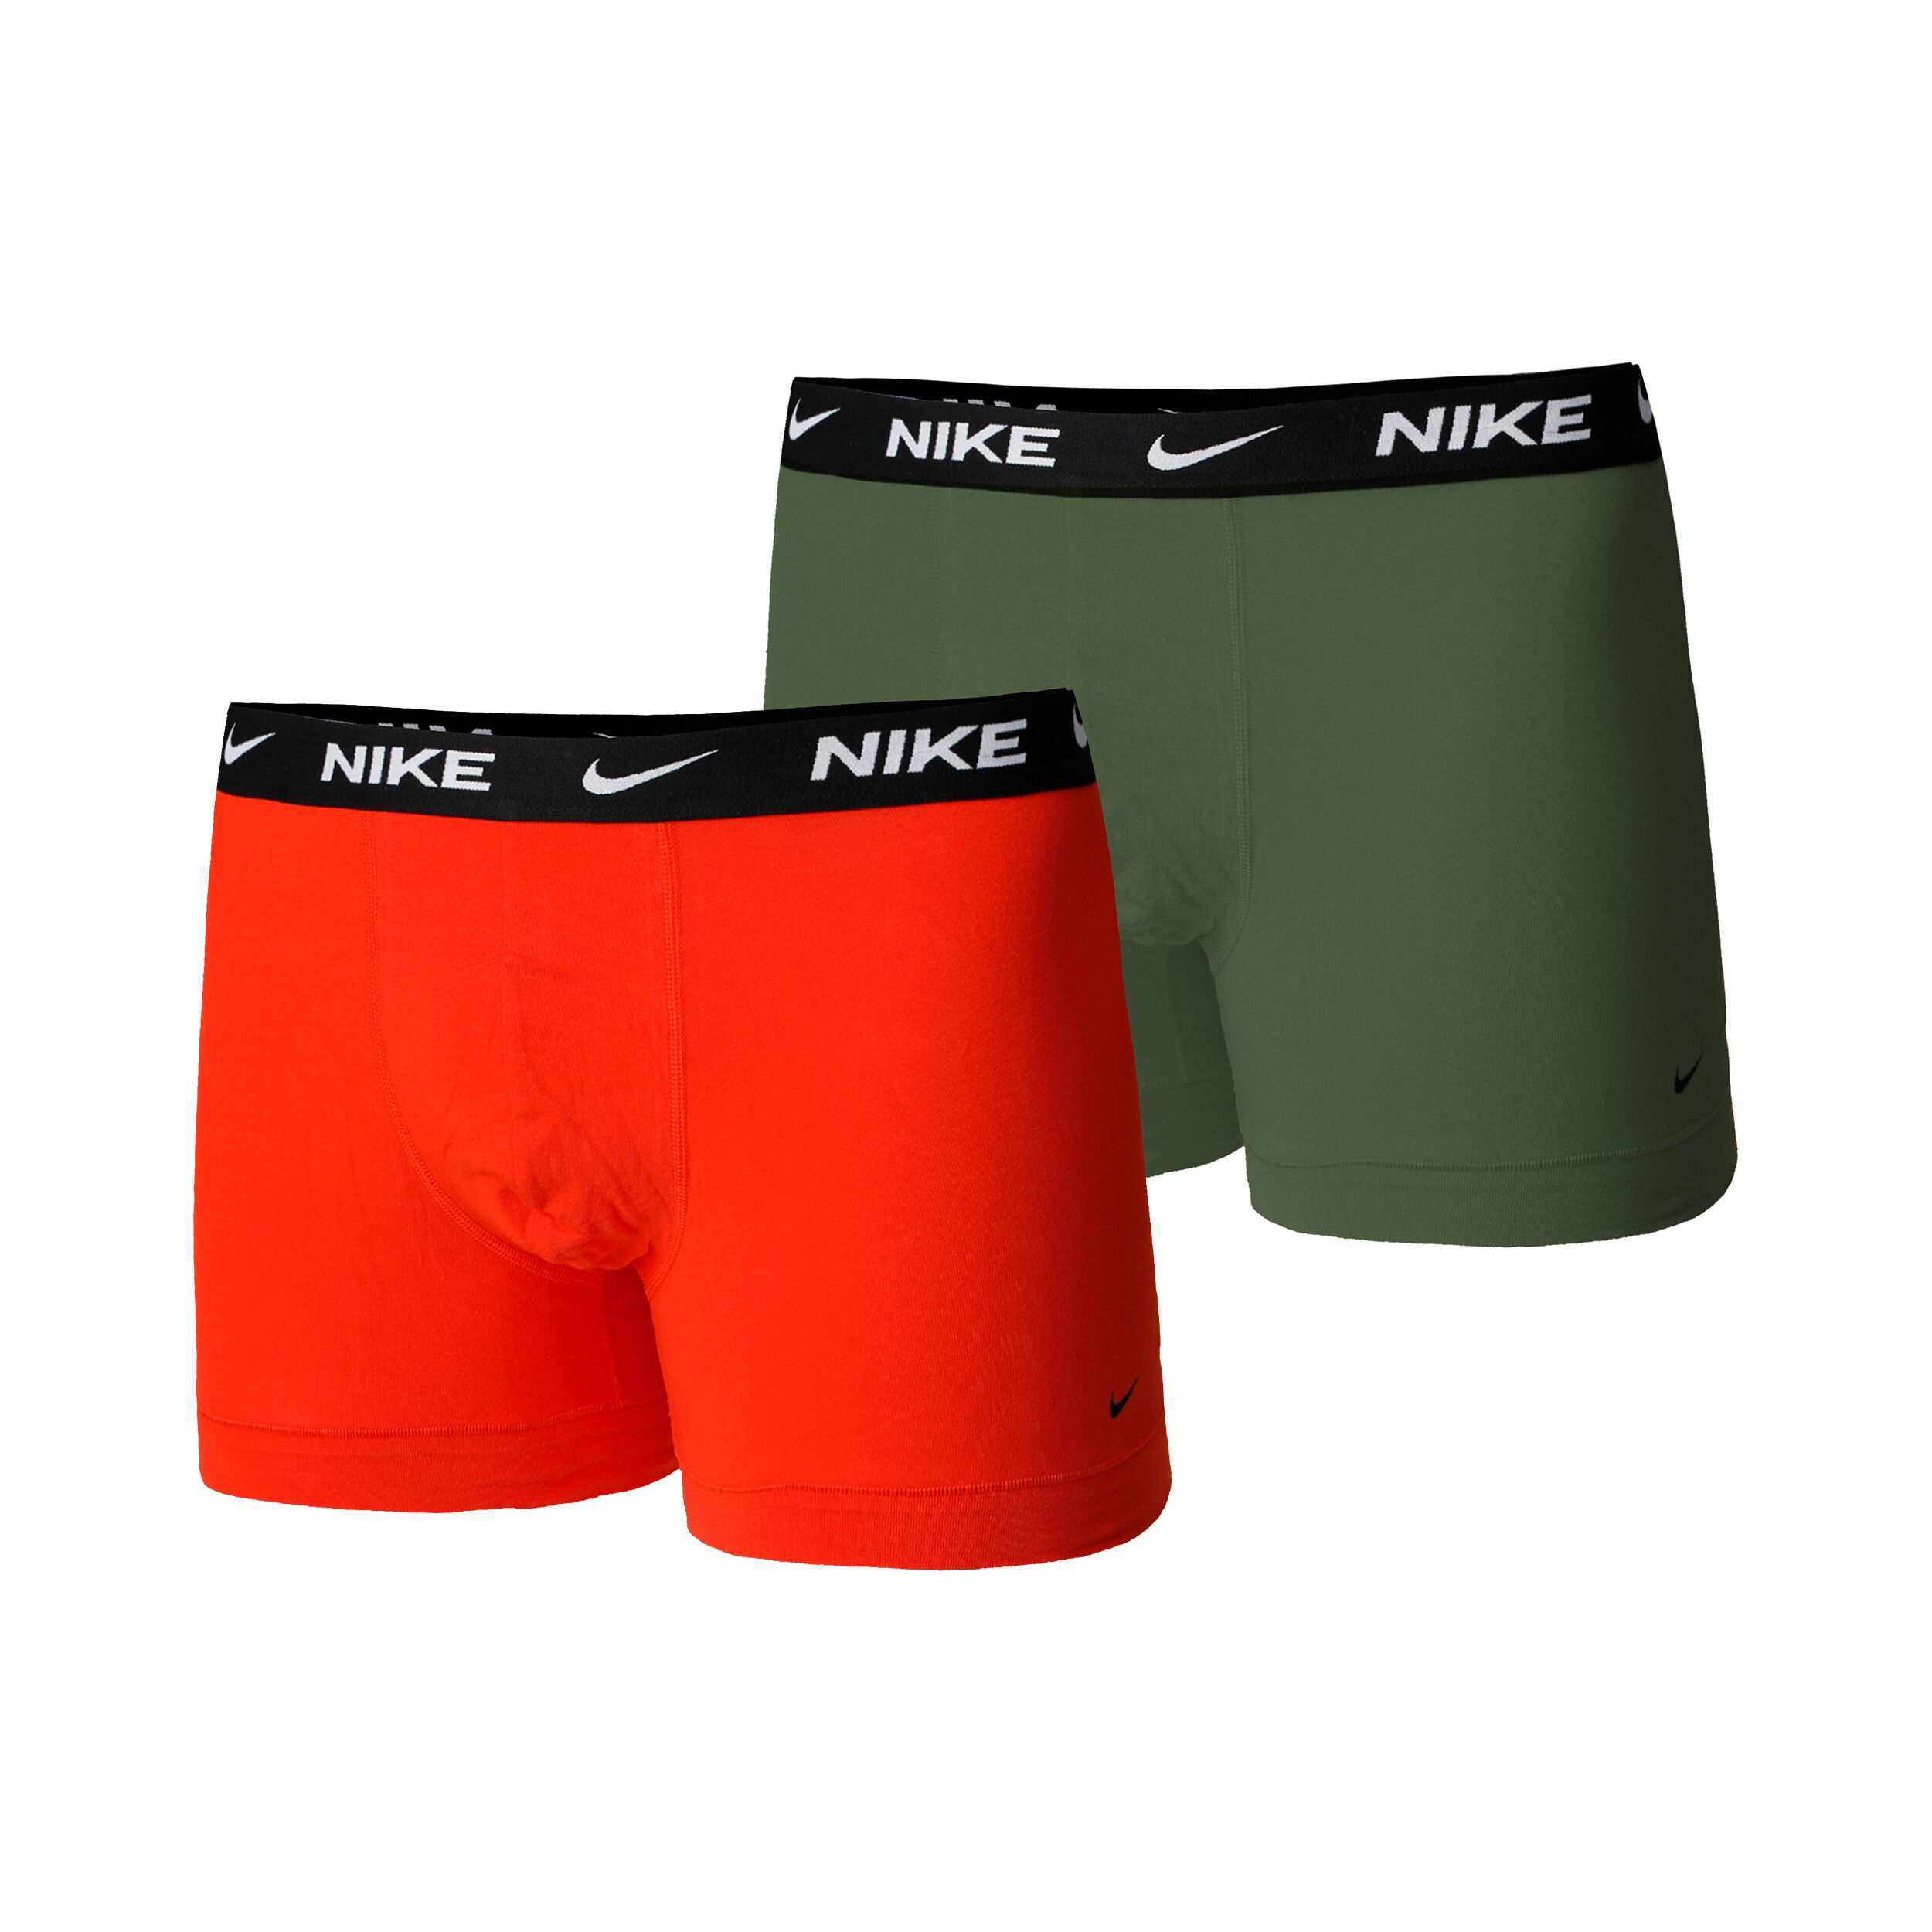 nike underwear shorts